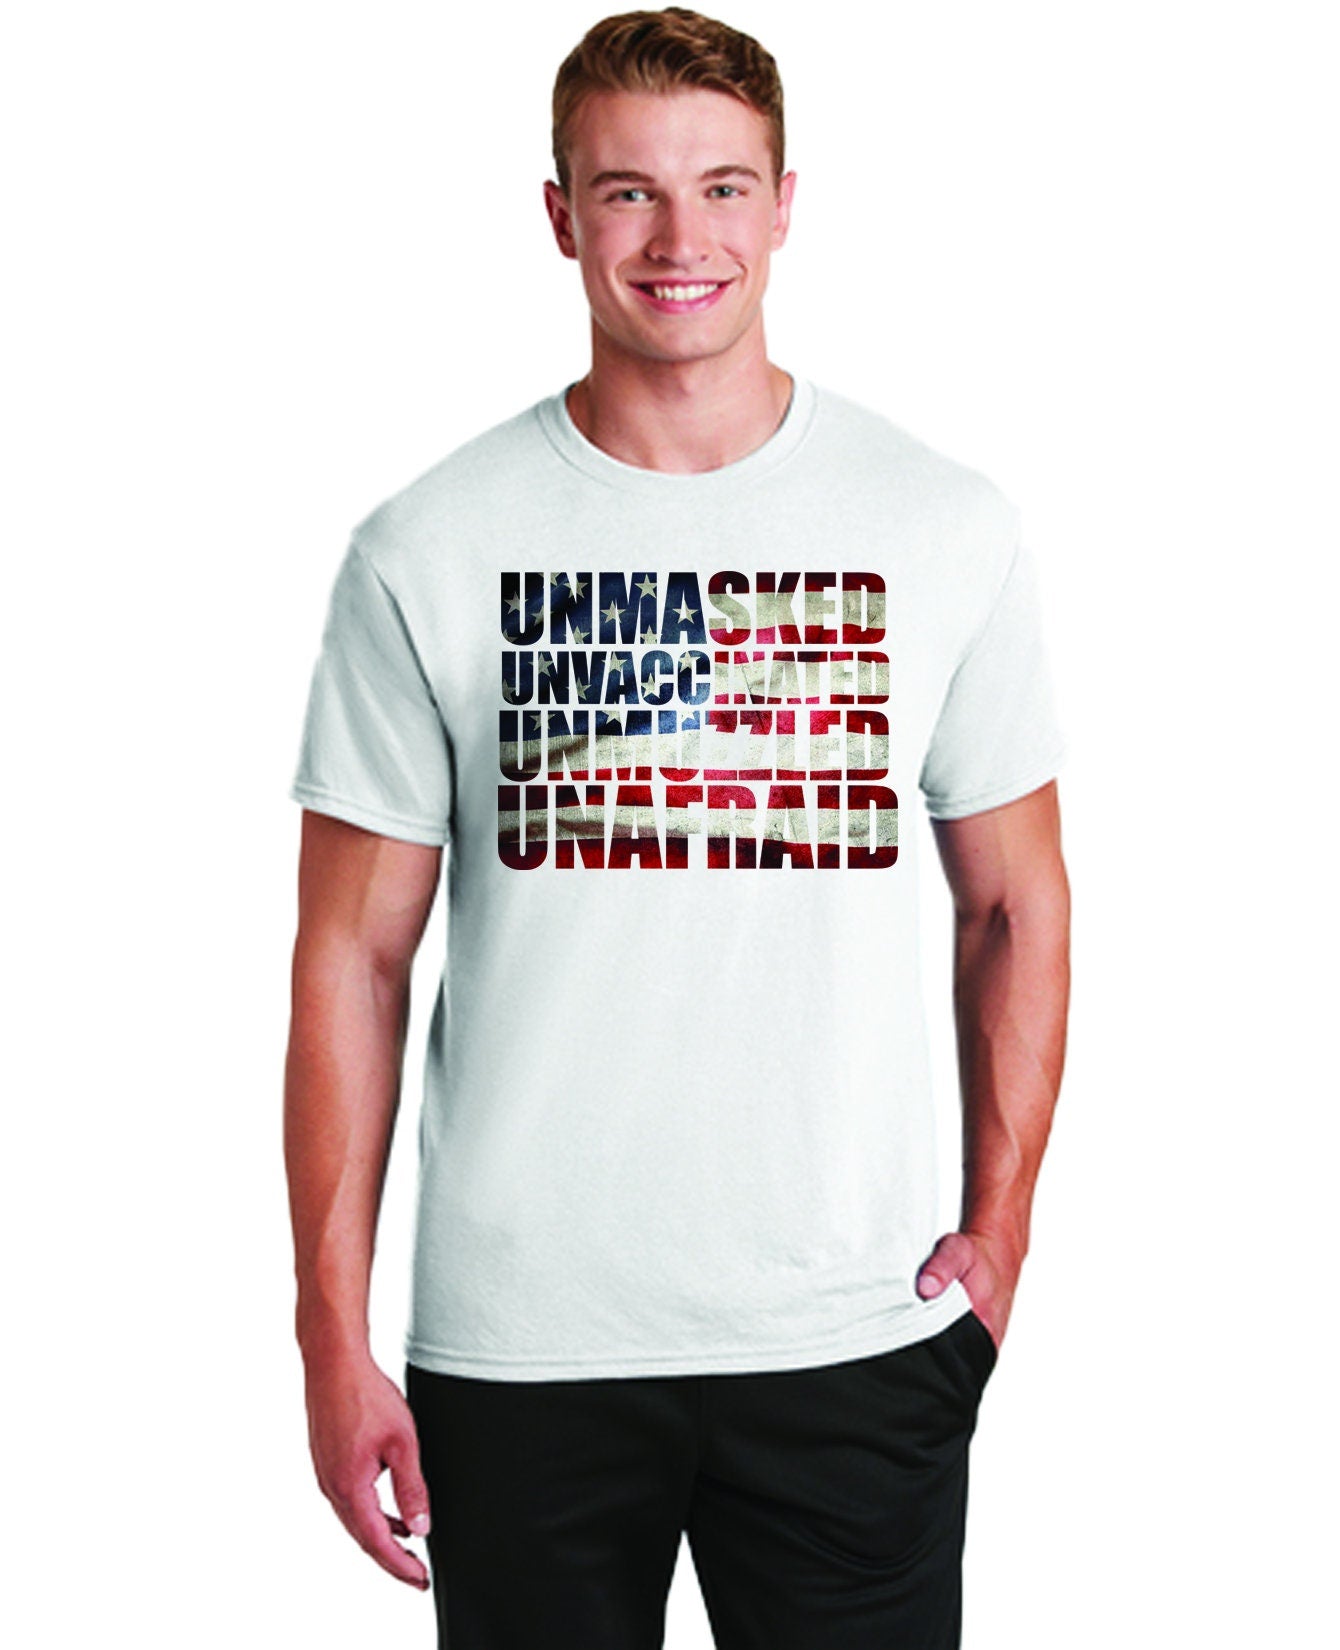 Unmasked Unvaccinated Unmuzzled Unafraid Shirt